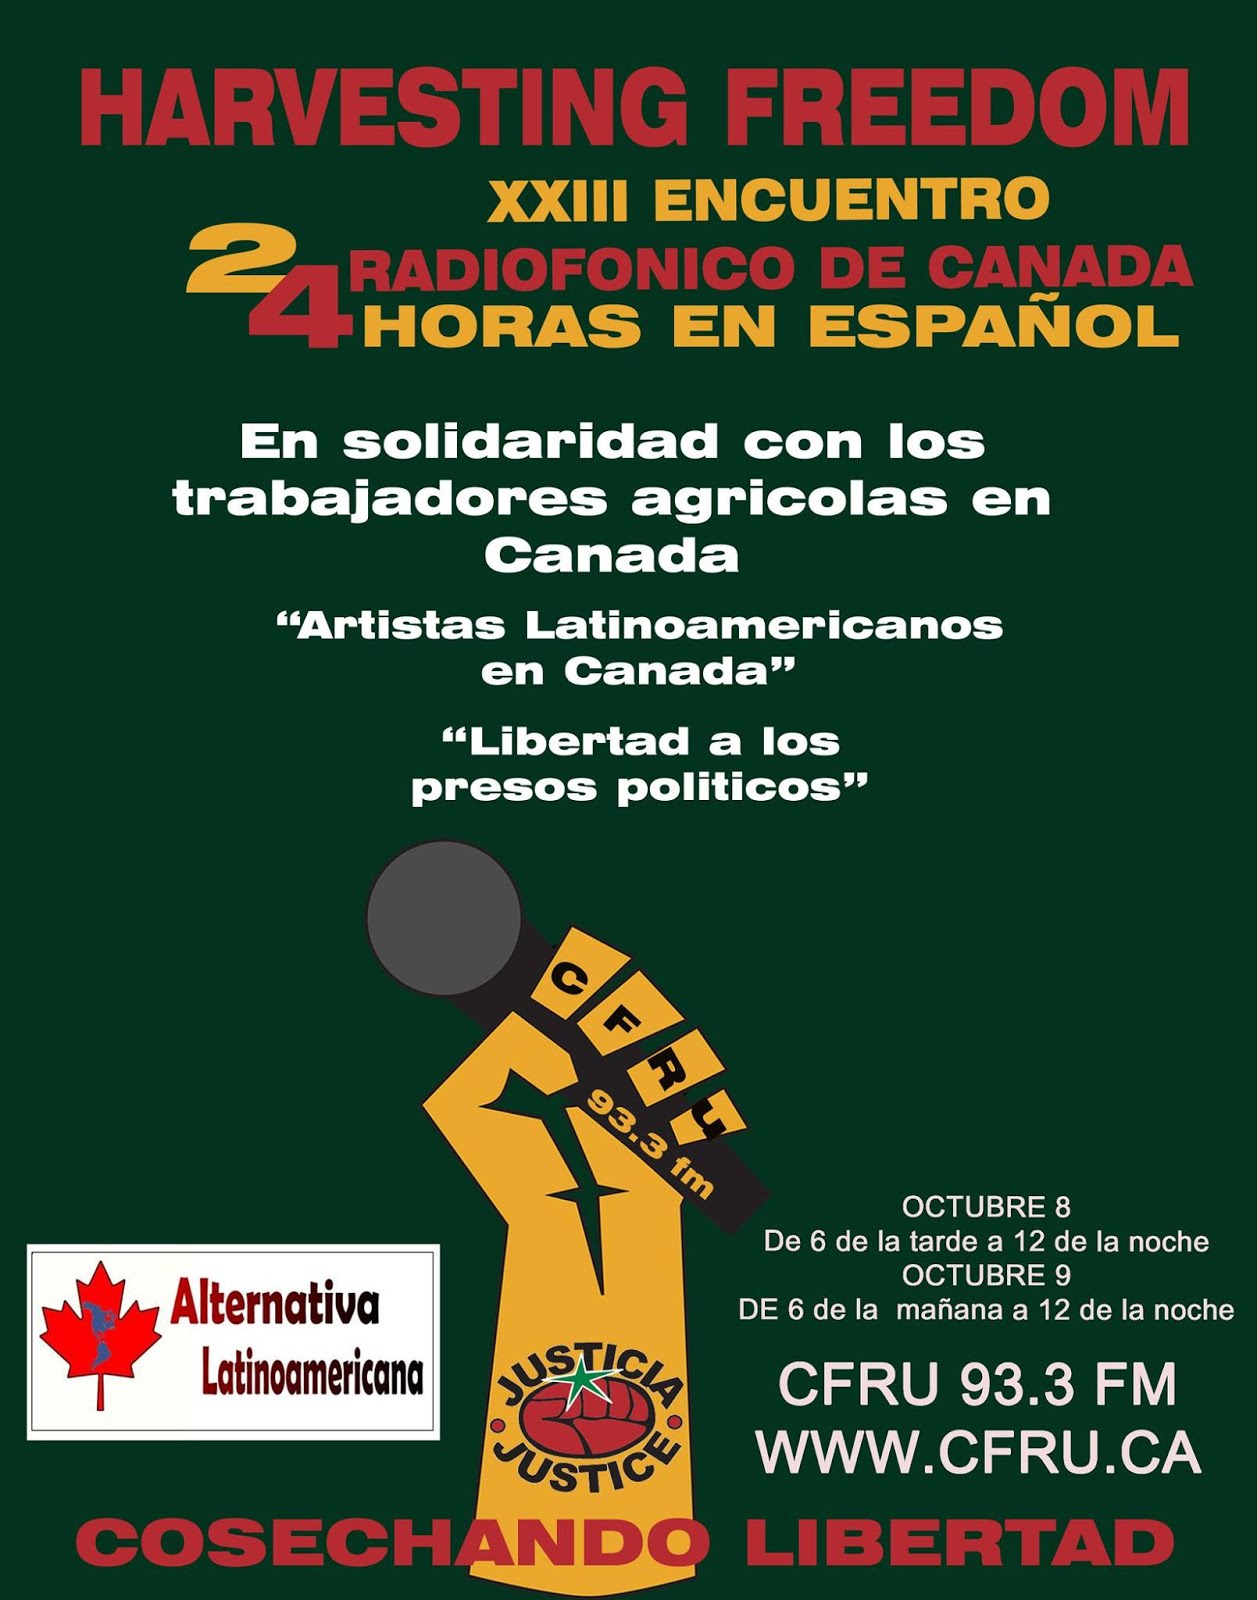 XXIII Encuentro Radiofonico de Canada